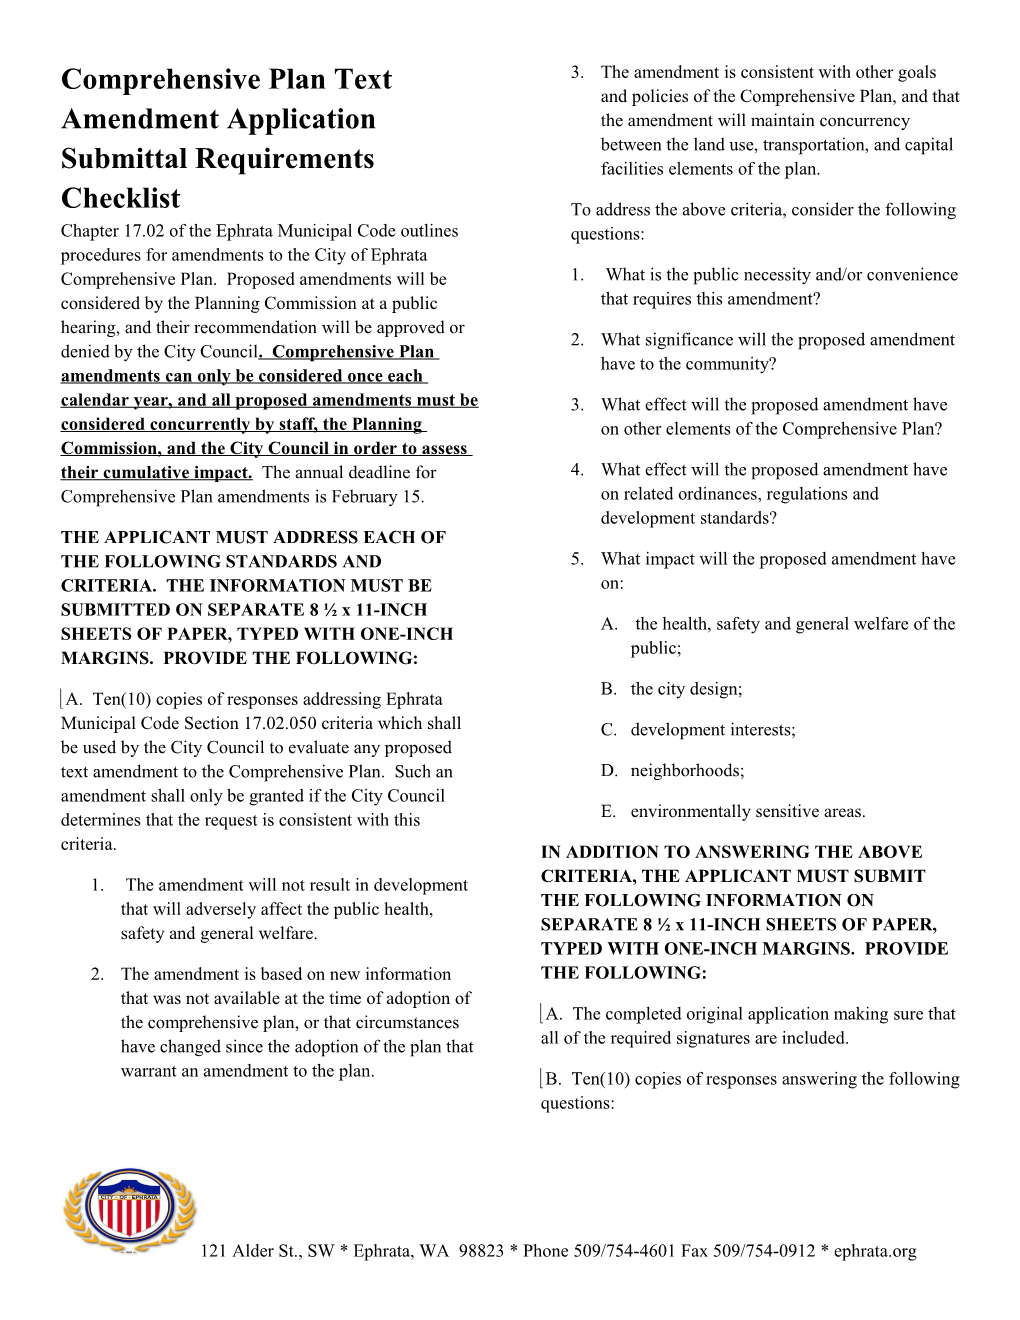 Amendment Application Submittal Requirements Checklist